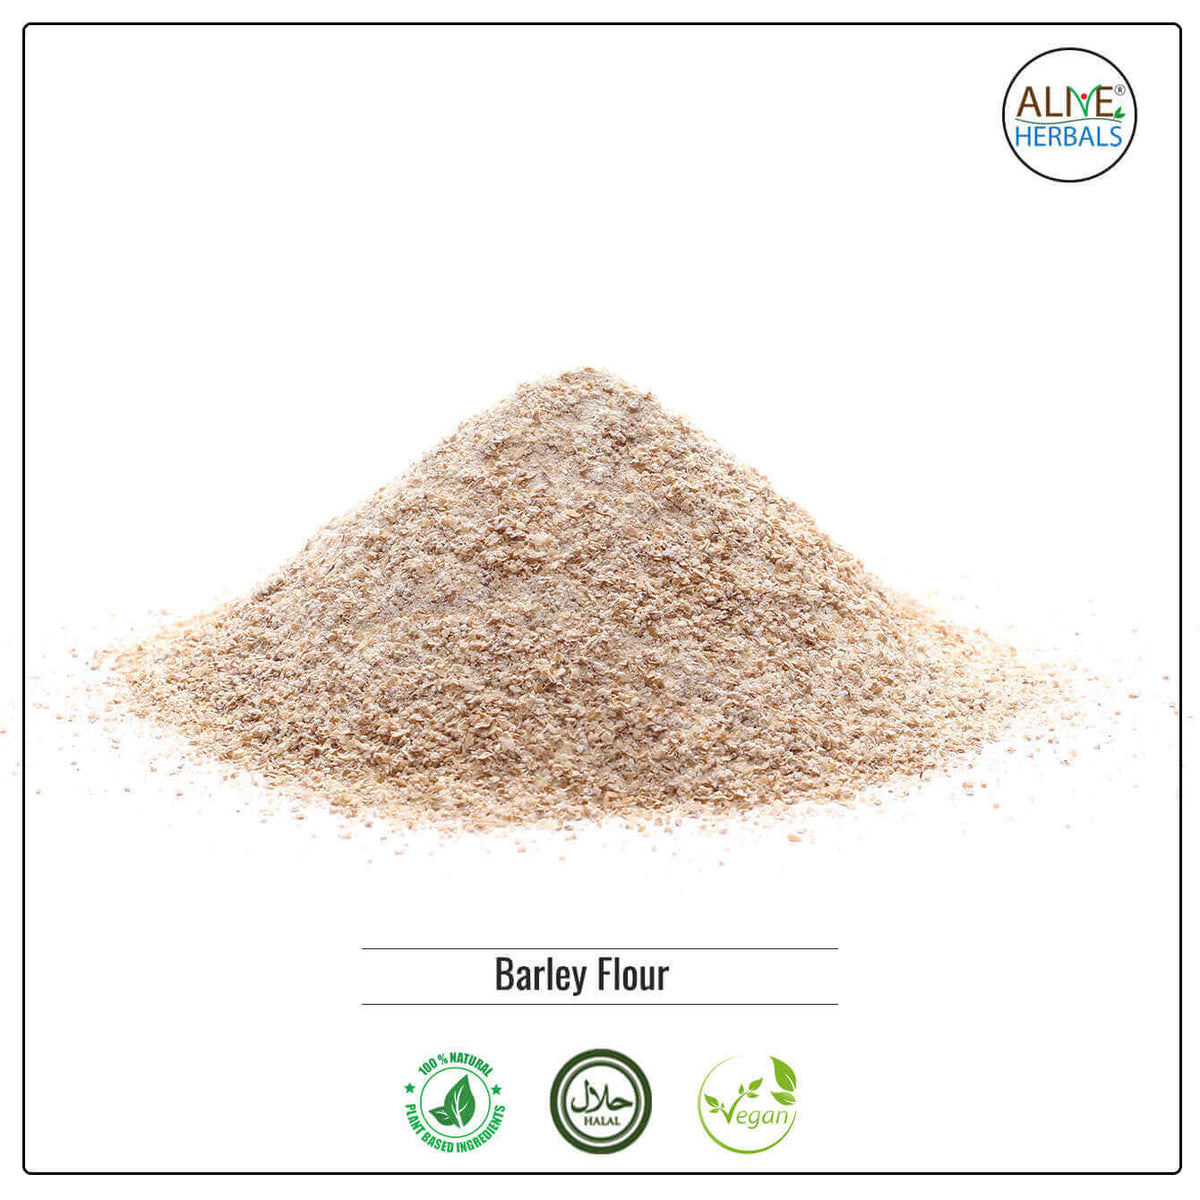 Barley Flour - Shop at Natural Food Store | Alive Herbals.